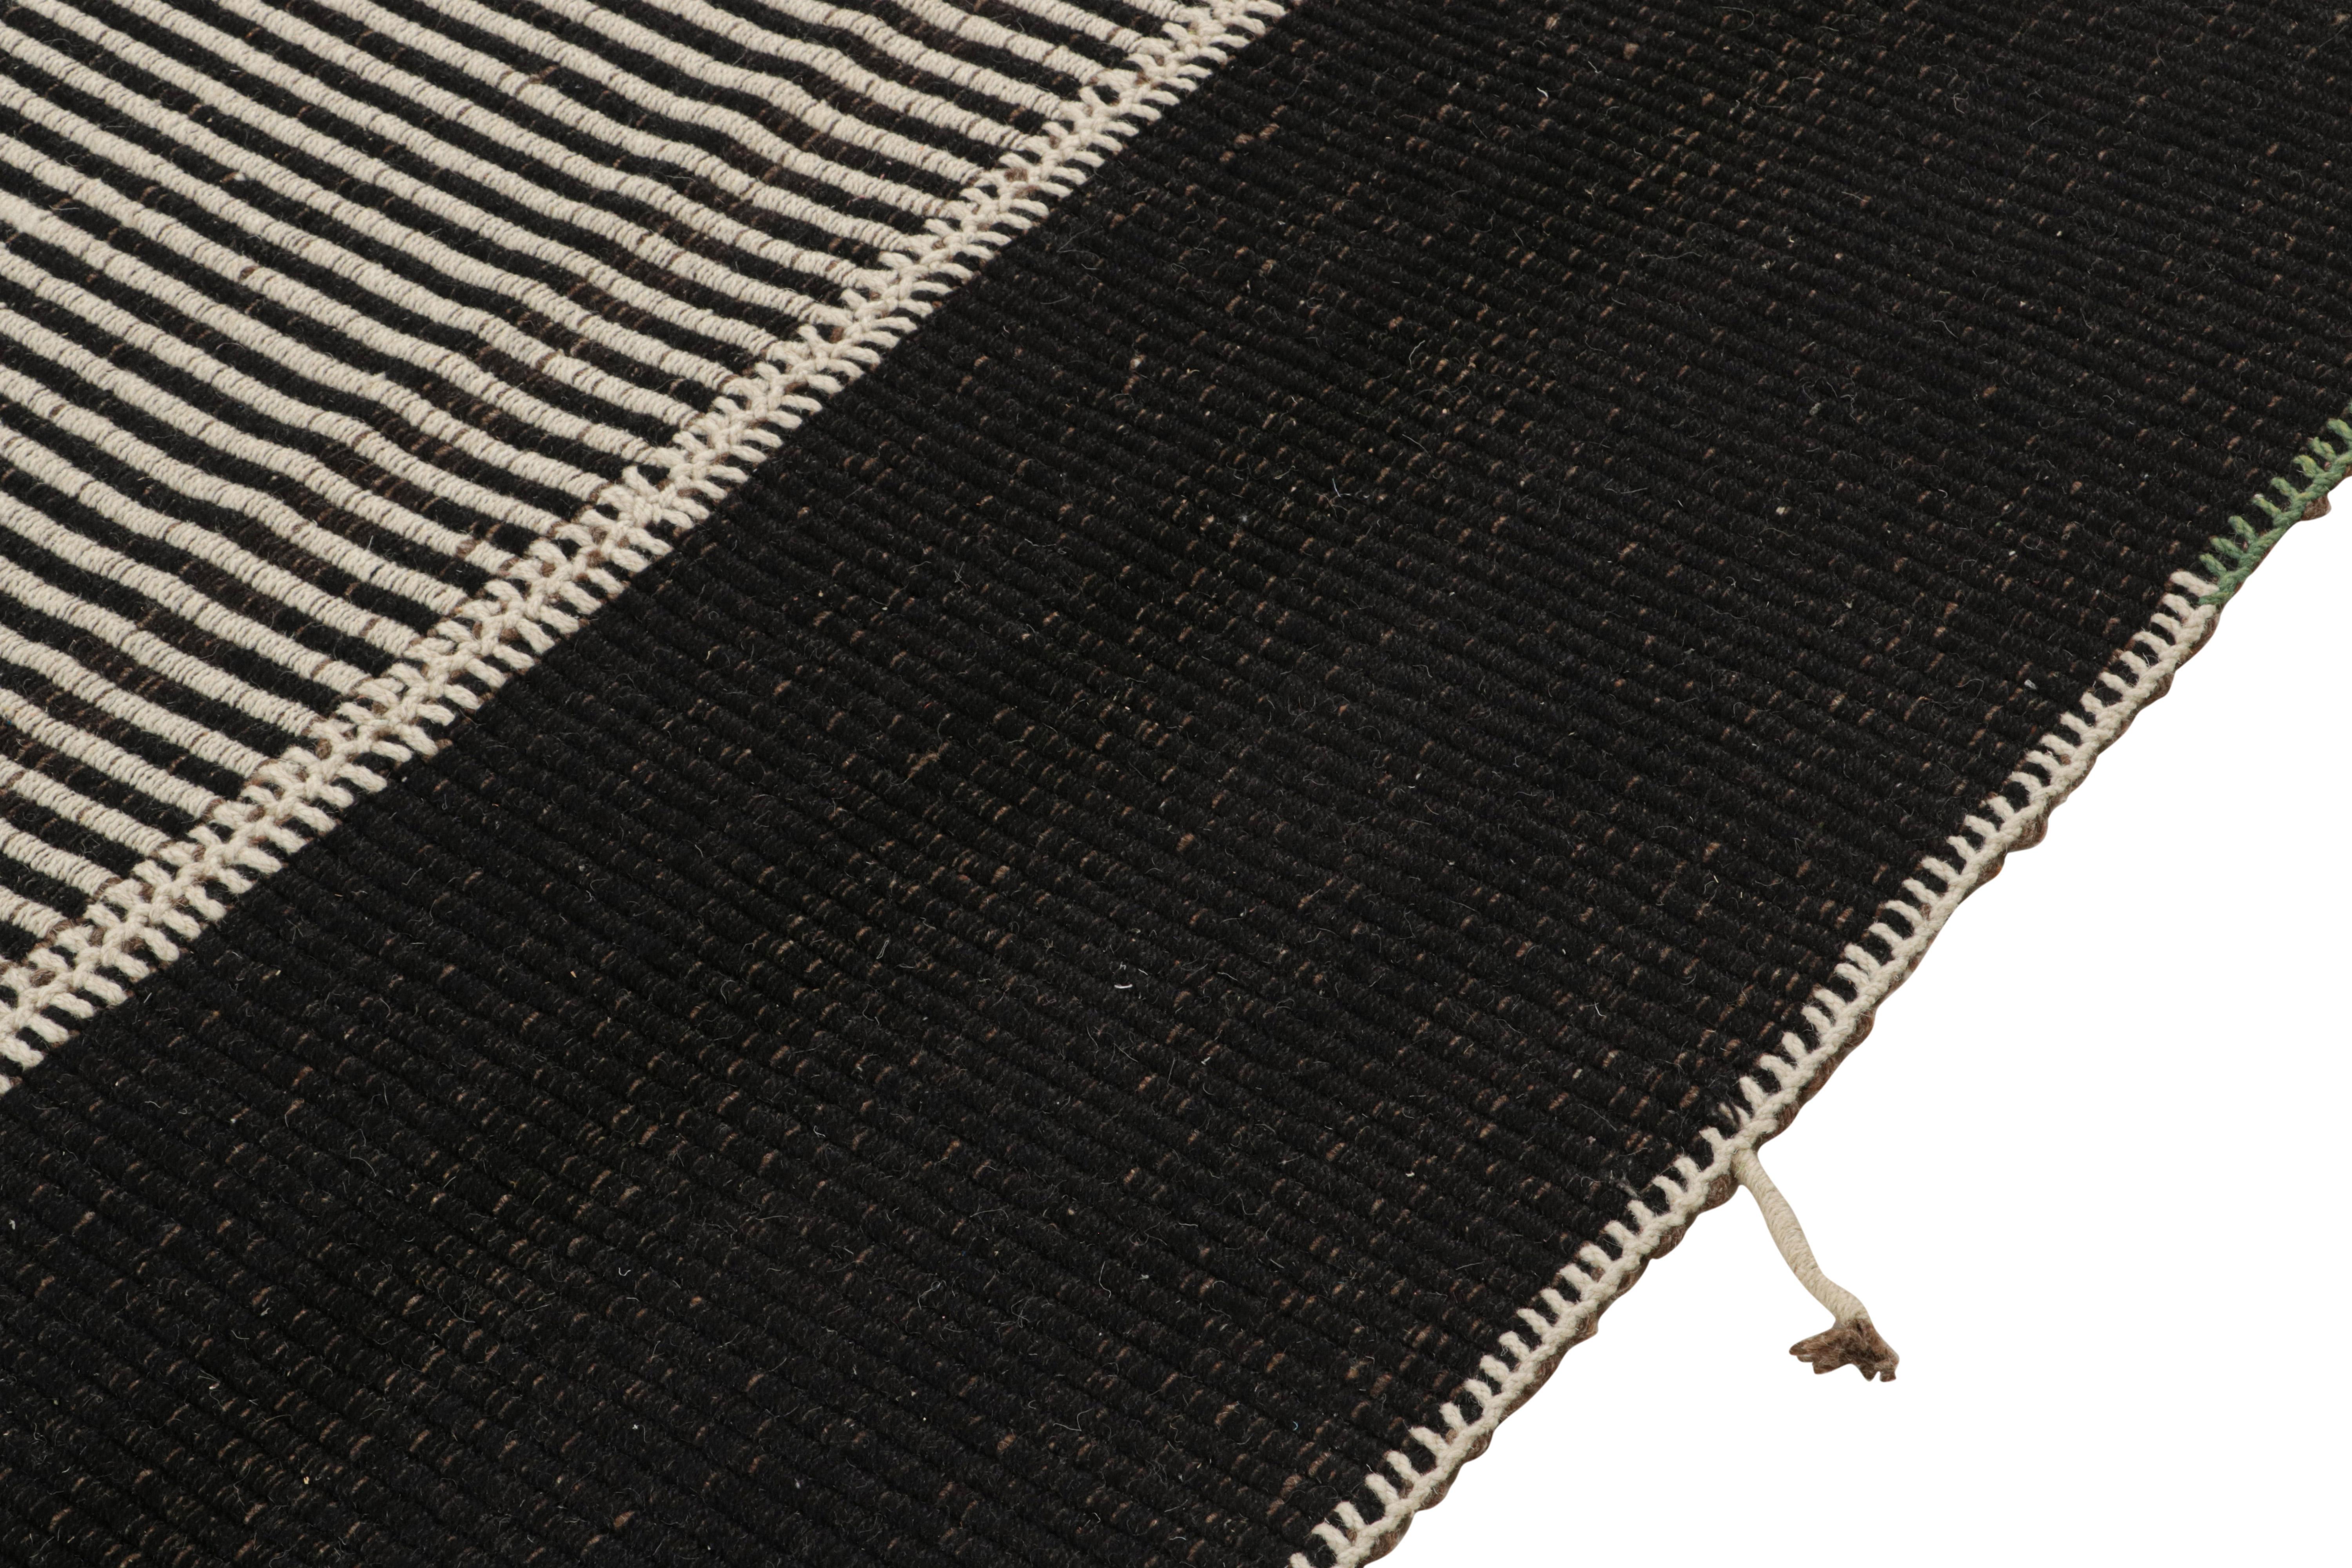 Wool Rug & Kilim’s Contemporary Custom Kilim Design in Black & White For Sale